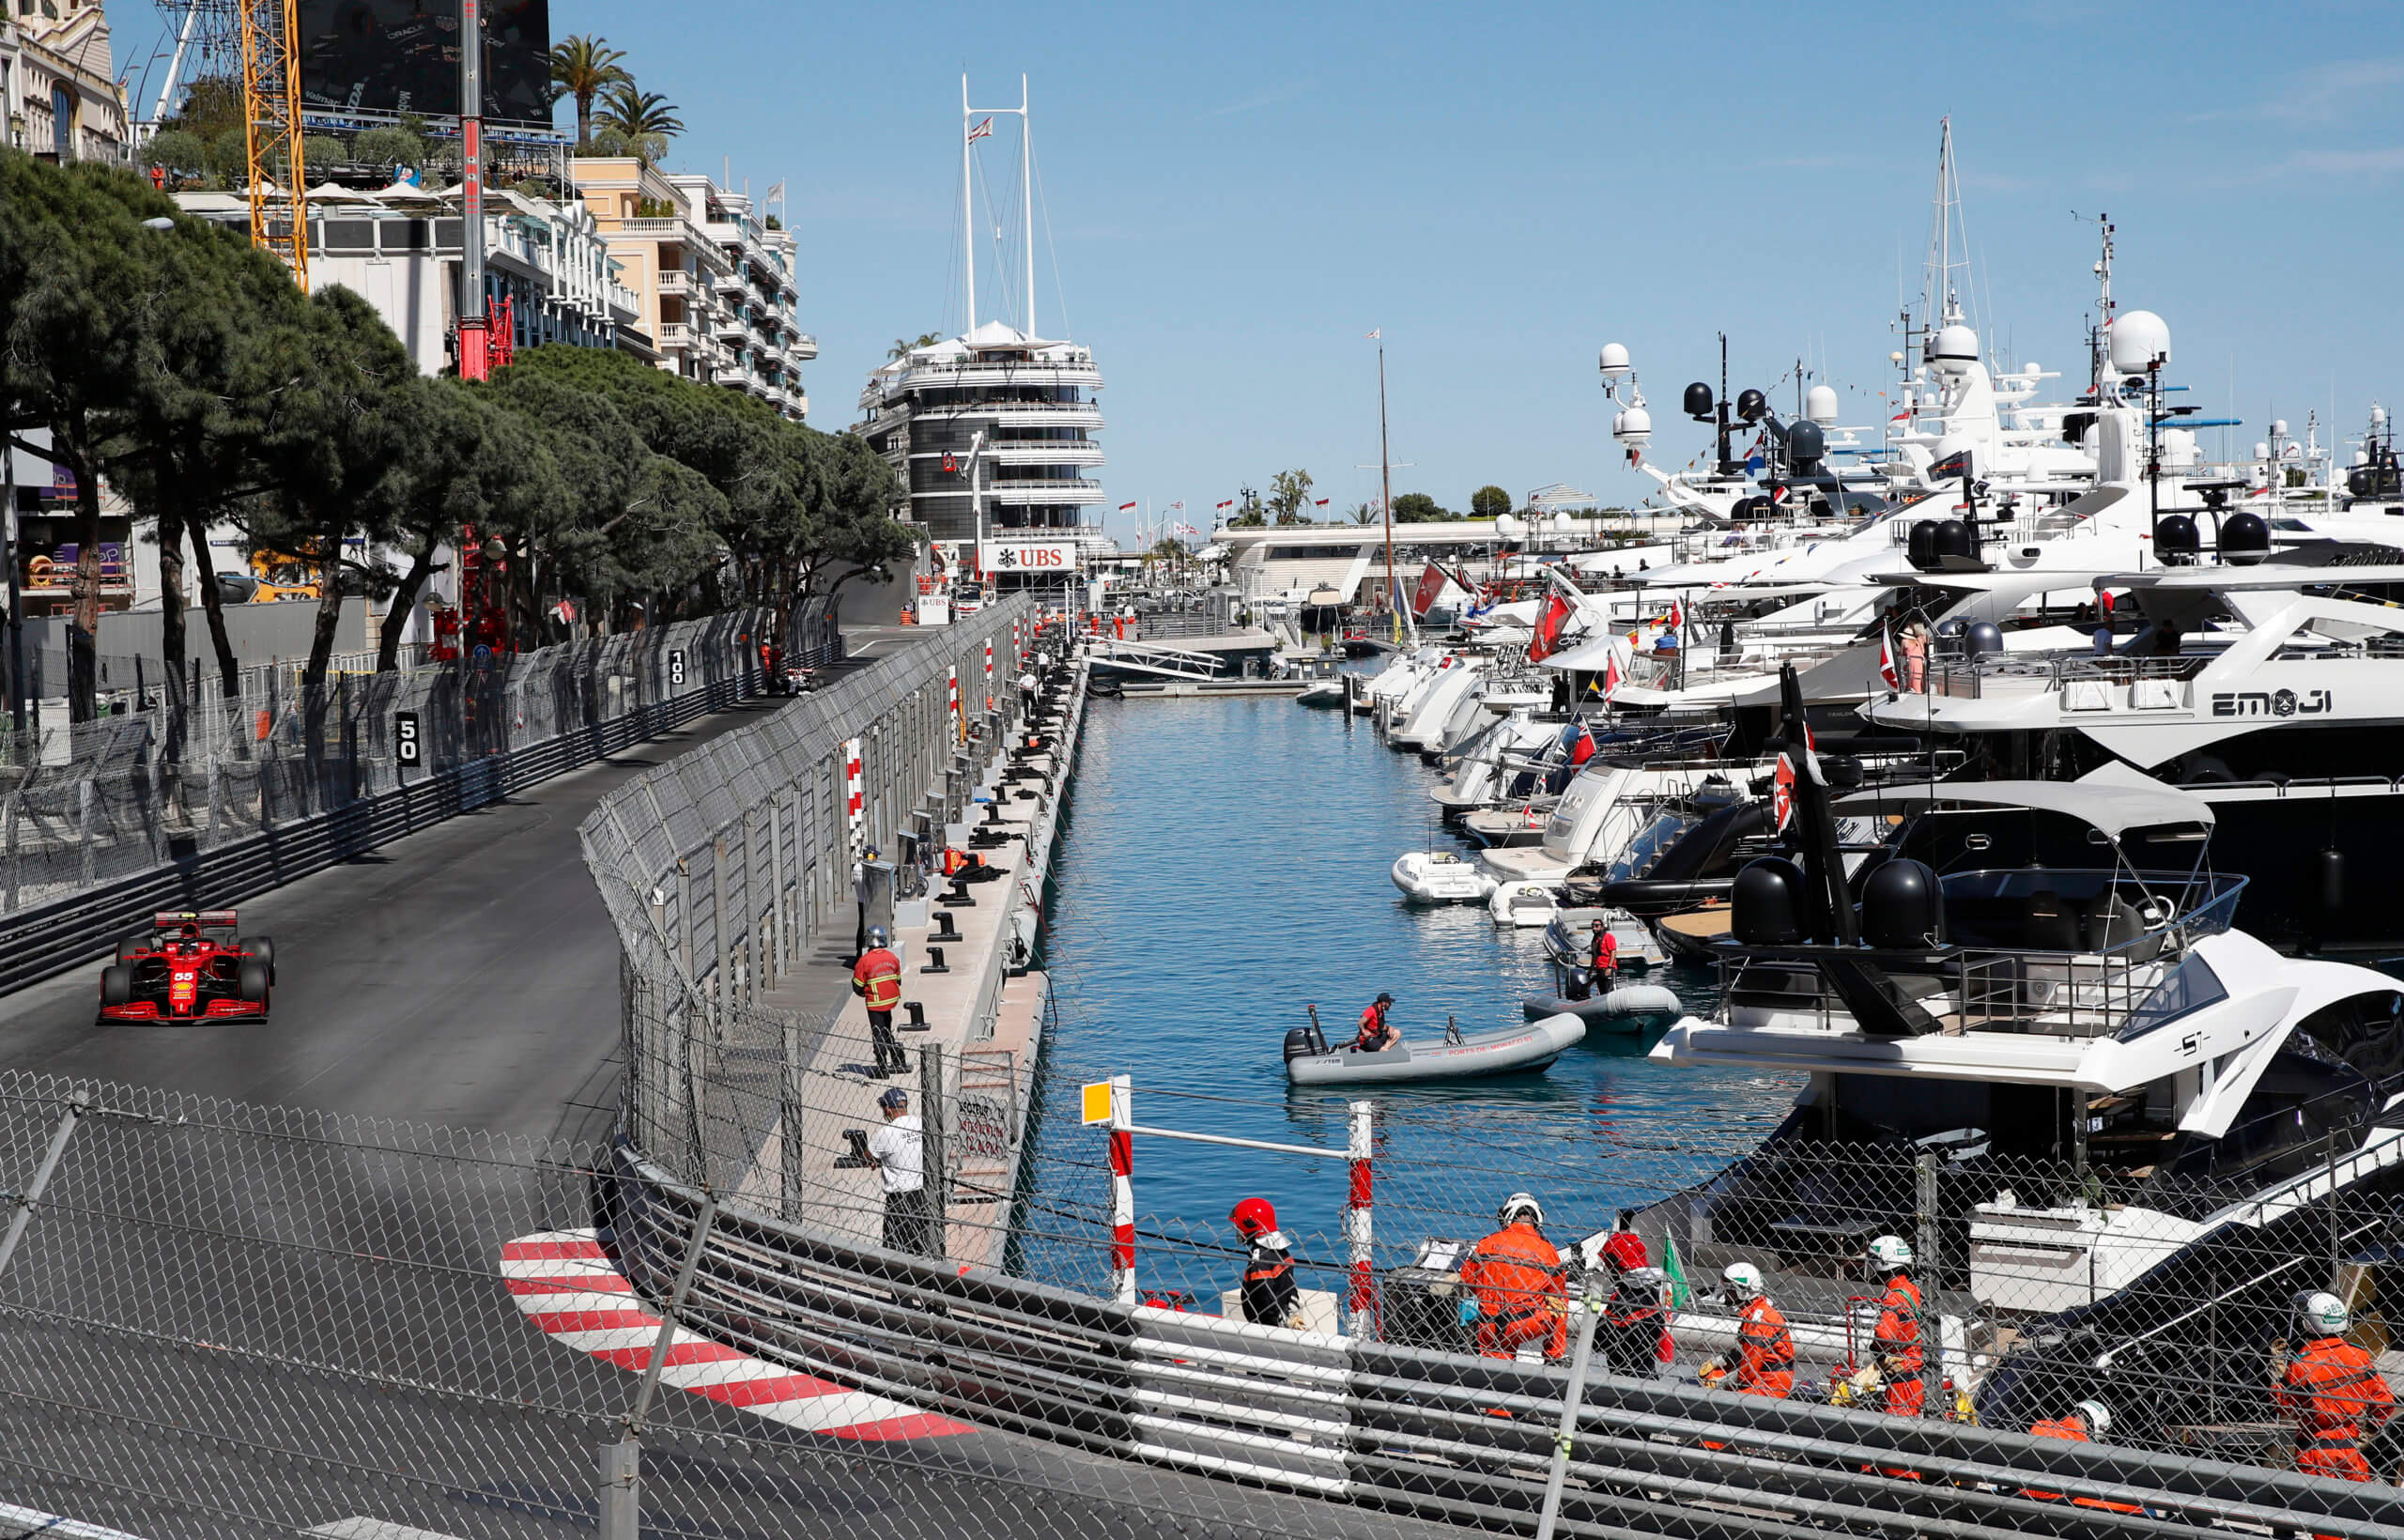 2022 F1 Monaco Grand Prix Odds, Predictions, How to Watch amNewYork